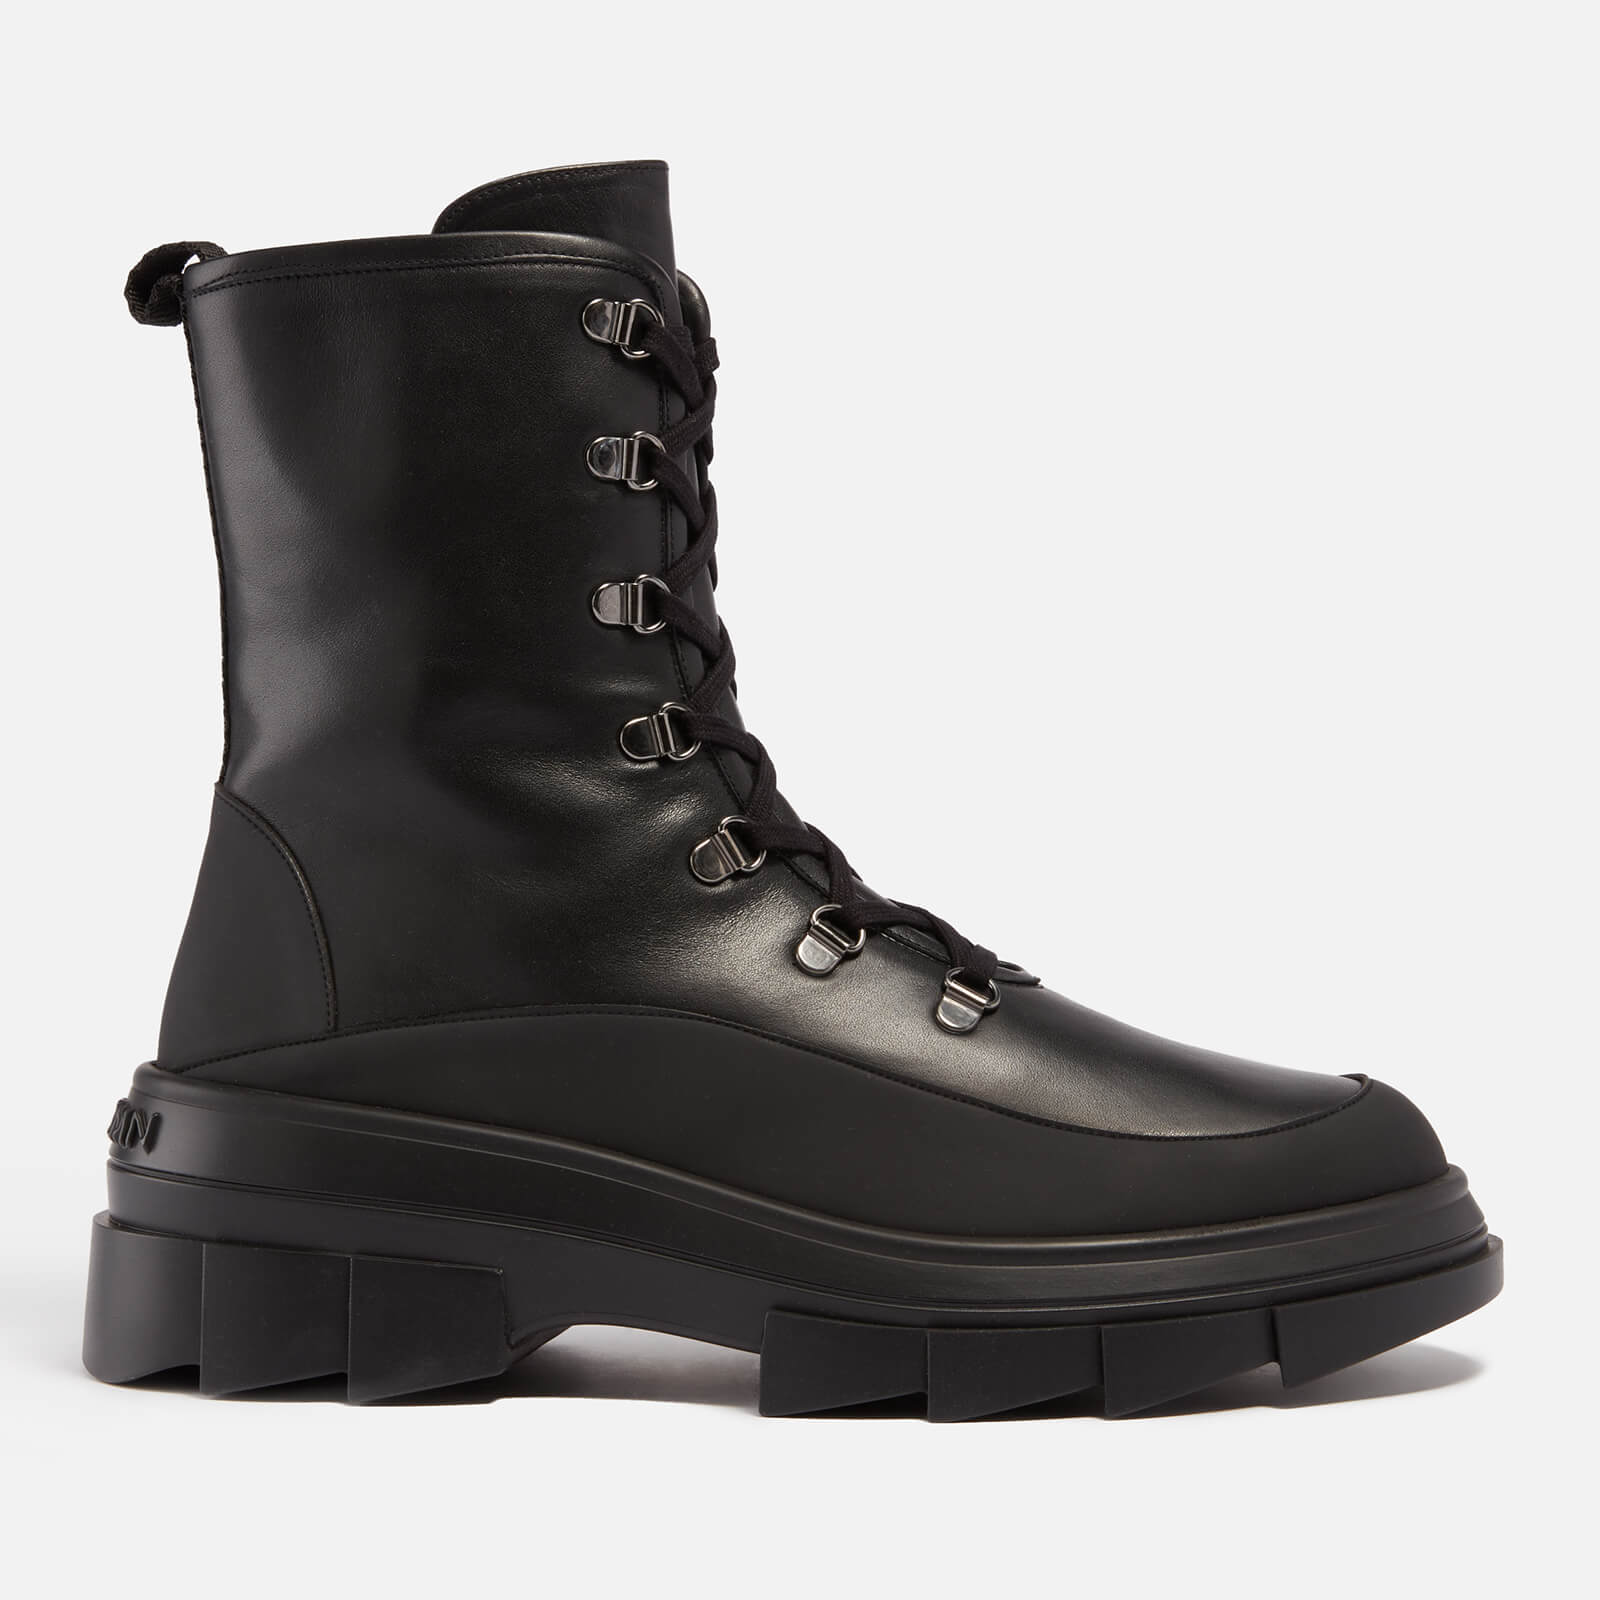 Stuart Weitzman Noho Leather and Rubber Hiking-Style Boots - UK 3